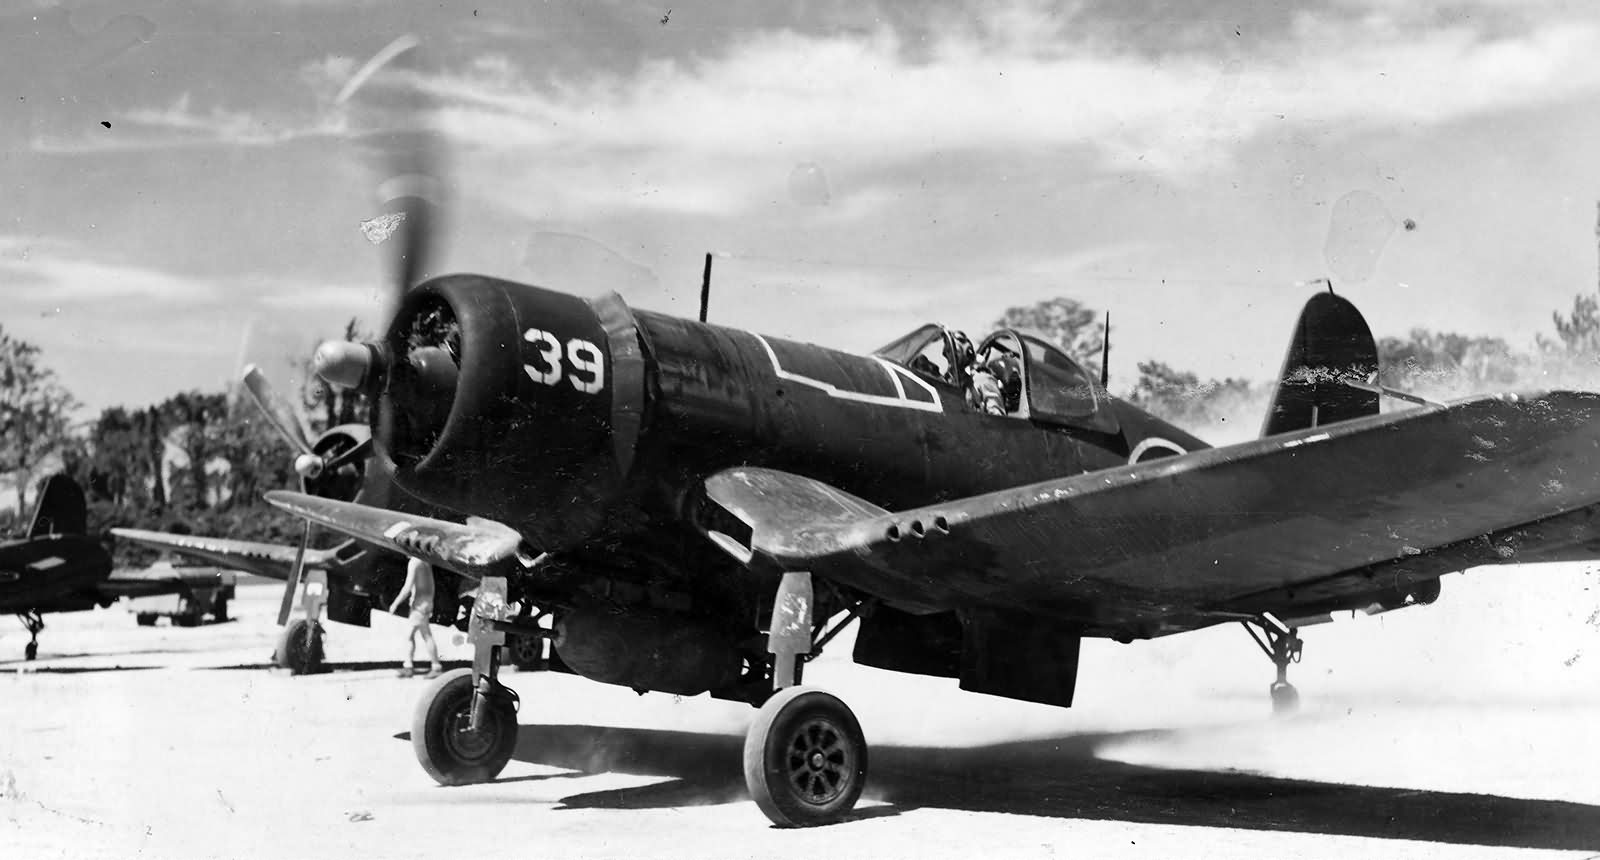 RNZAF at 01 Emirau BuNo F4U-1D 50444 19Sqn Corsair 13th NZ5439 Yelton Dec Vought as Asisbiz PO 1944 R